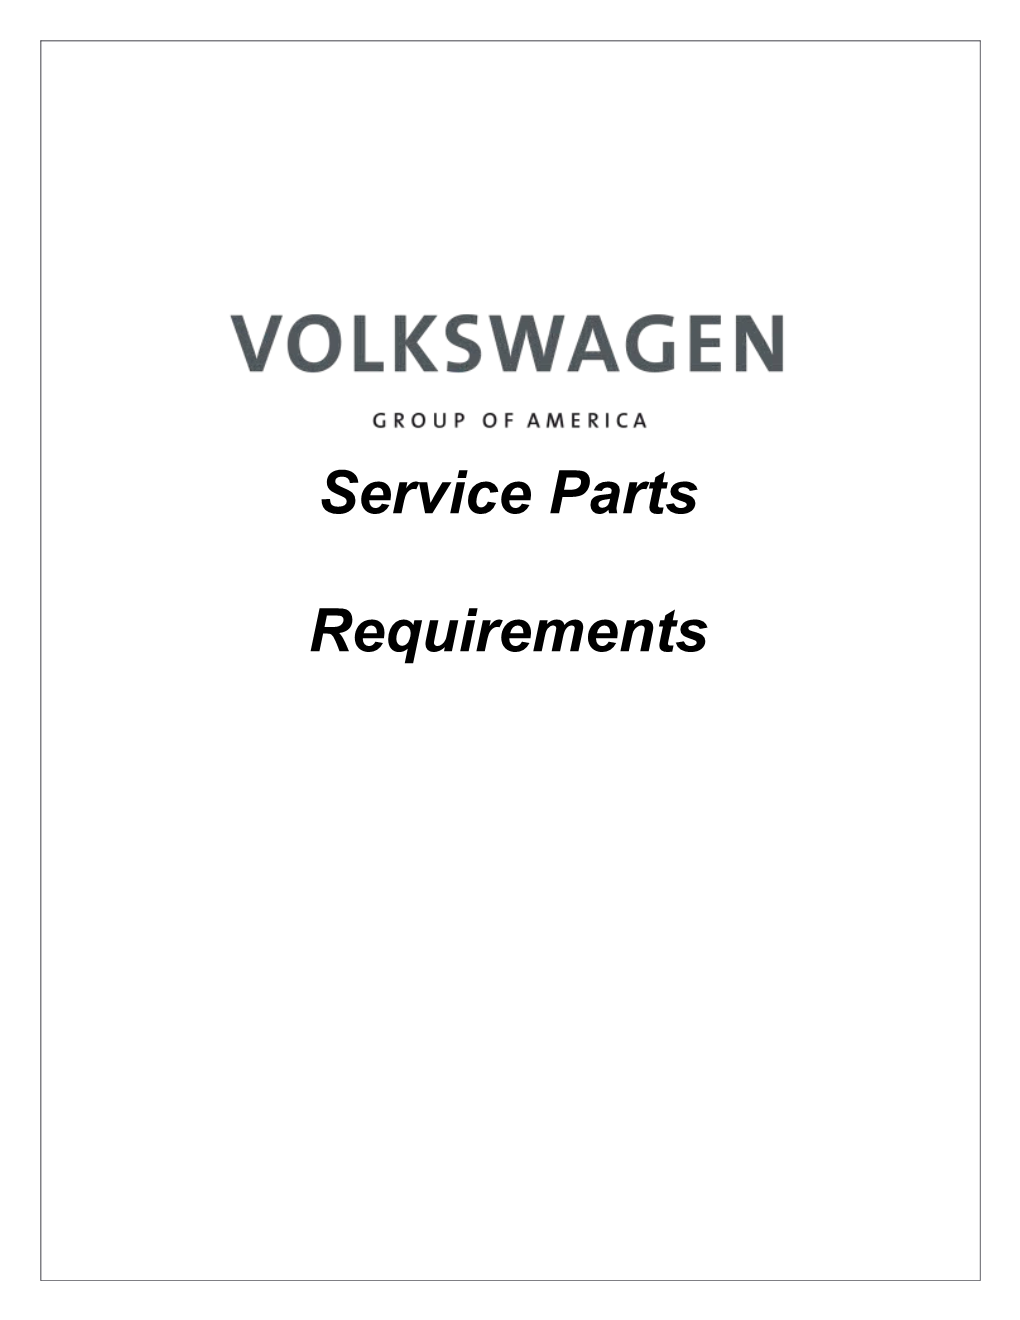 Service Parts Requirements